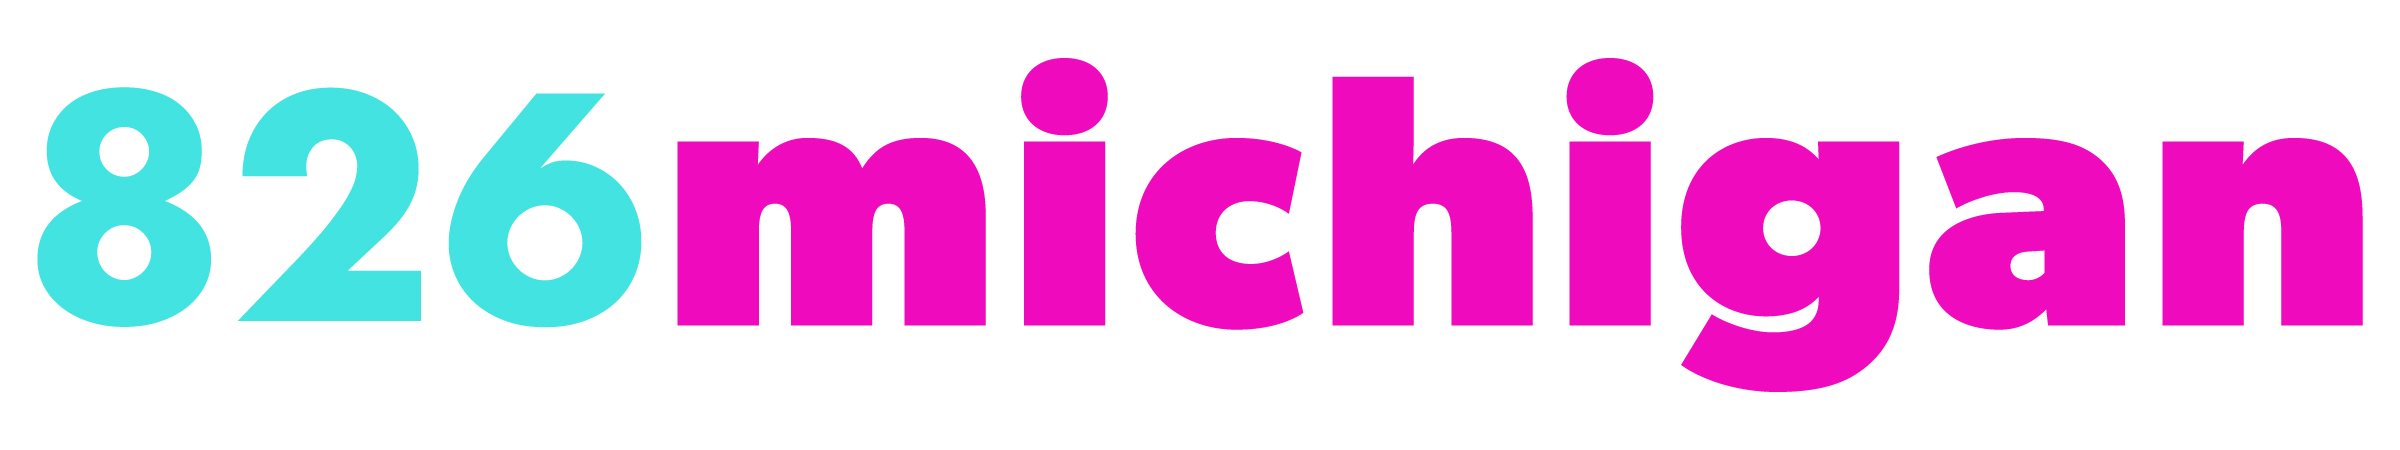 826michigan logo